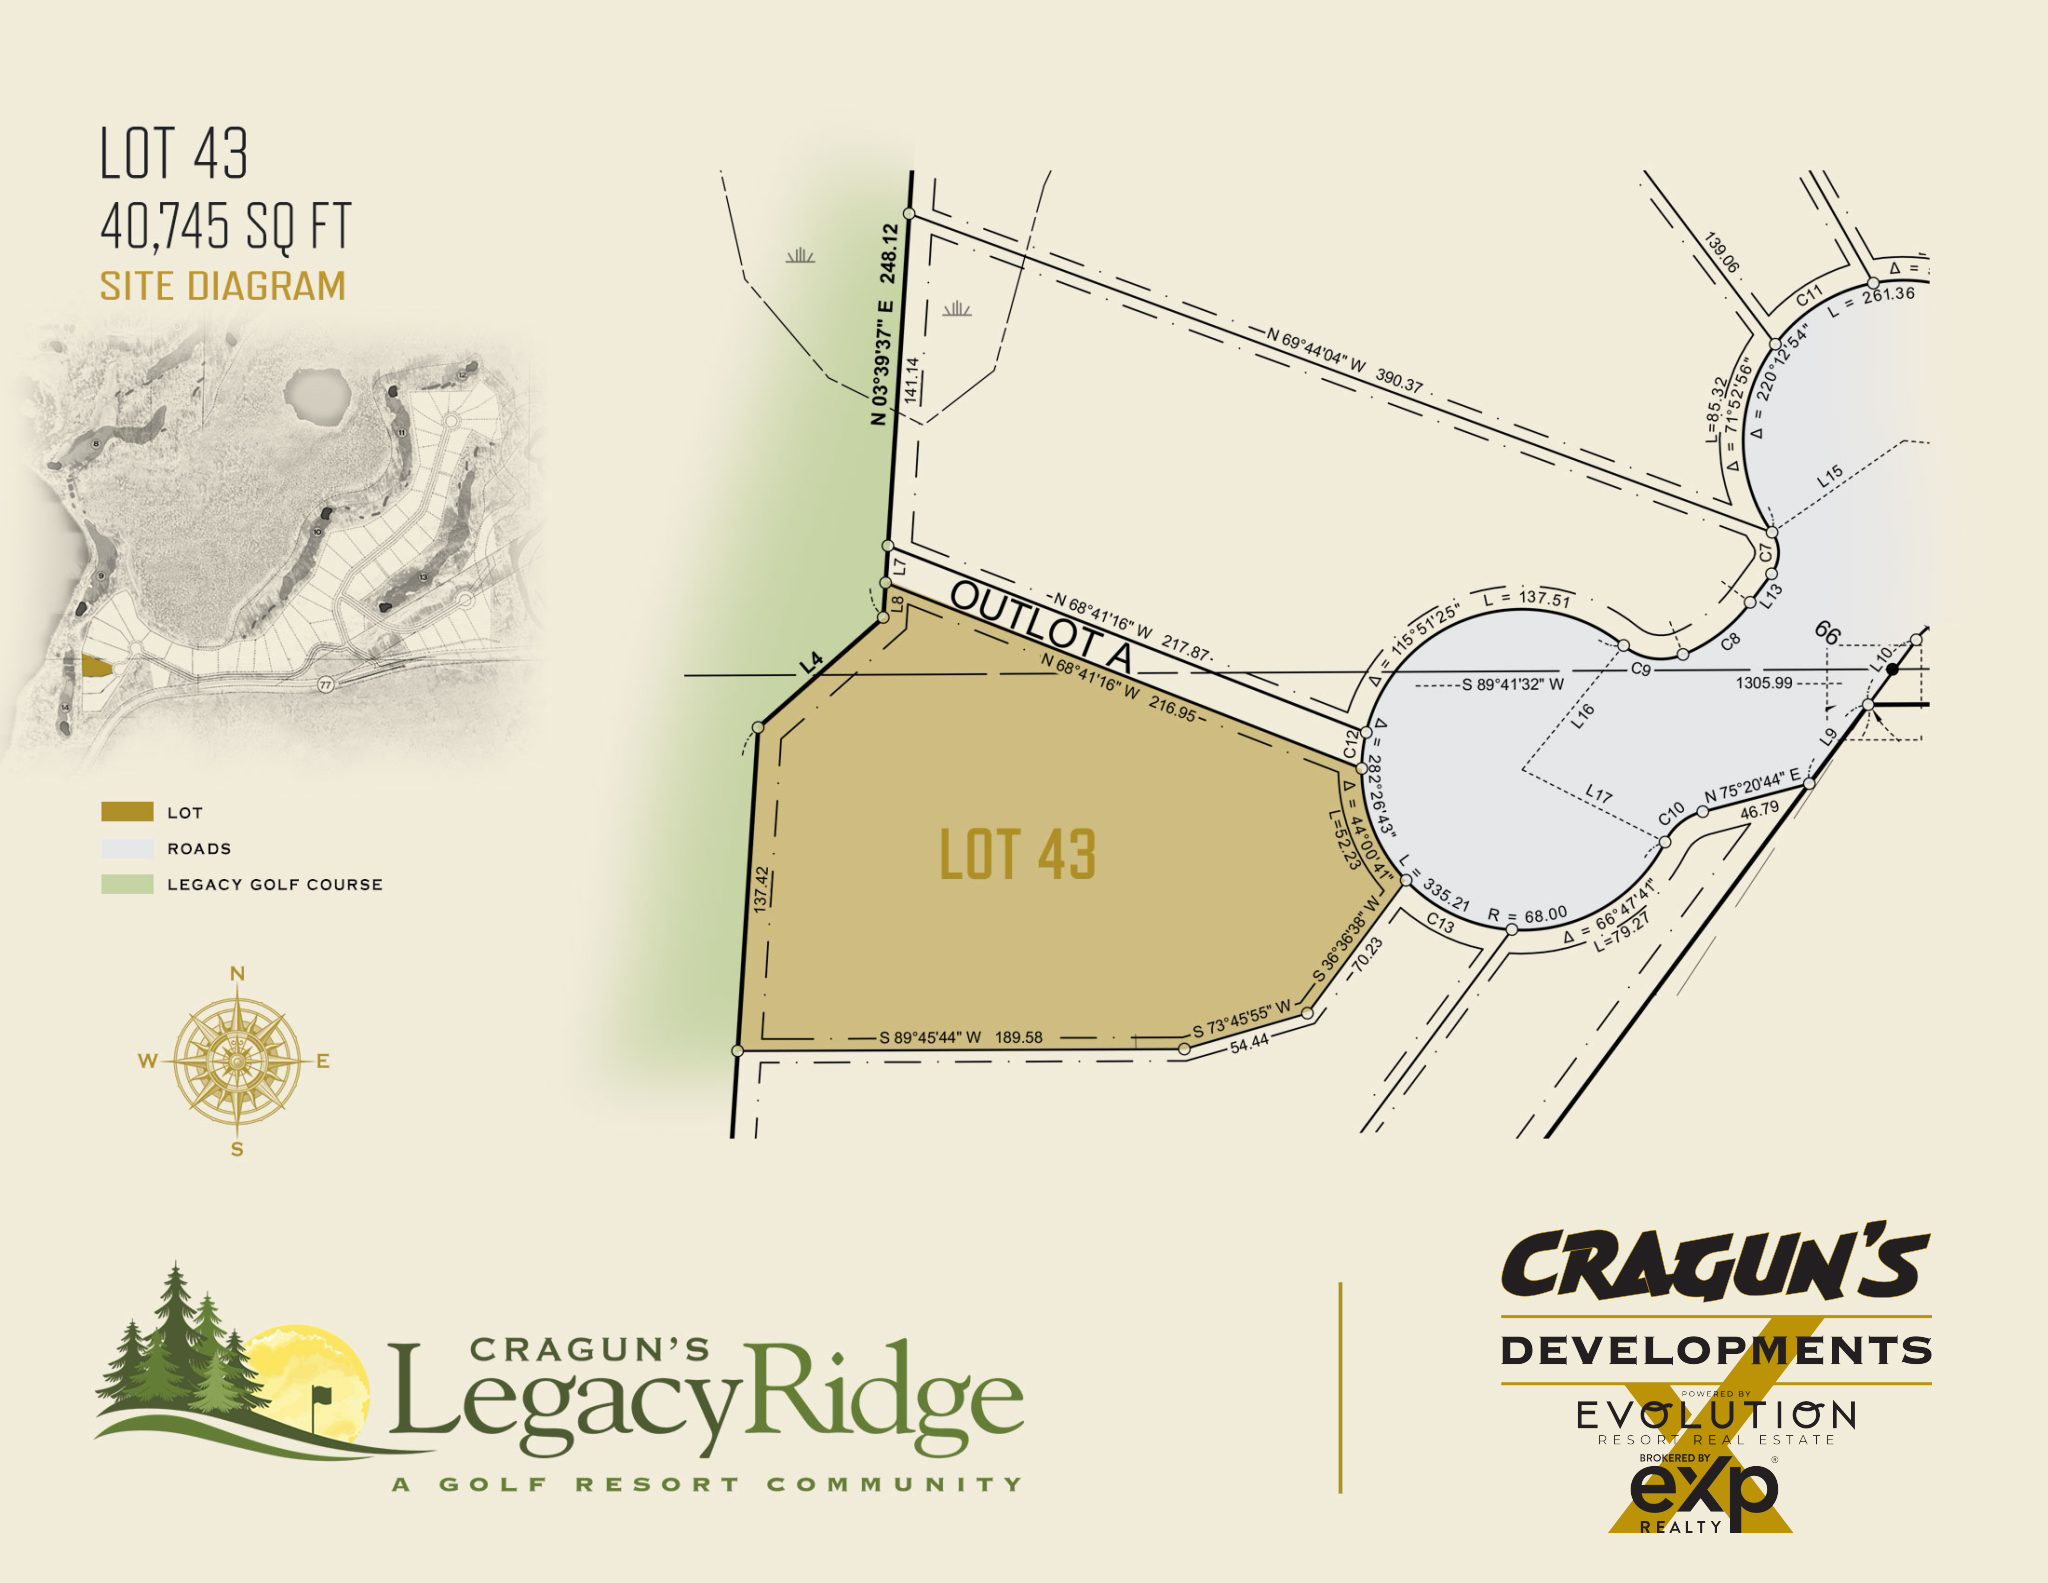 Legacy Ridge Lot 43 at Cragun's Developments in Brainerd, MN